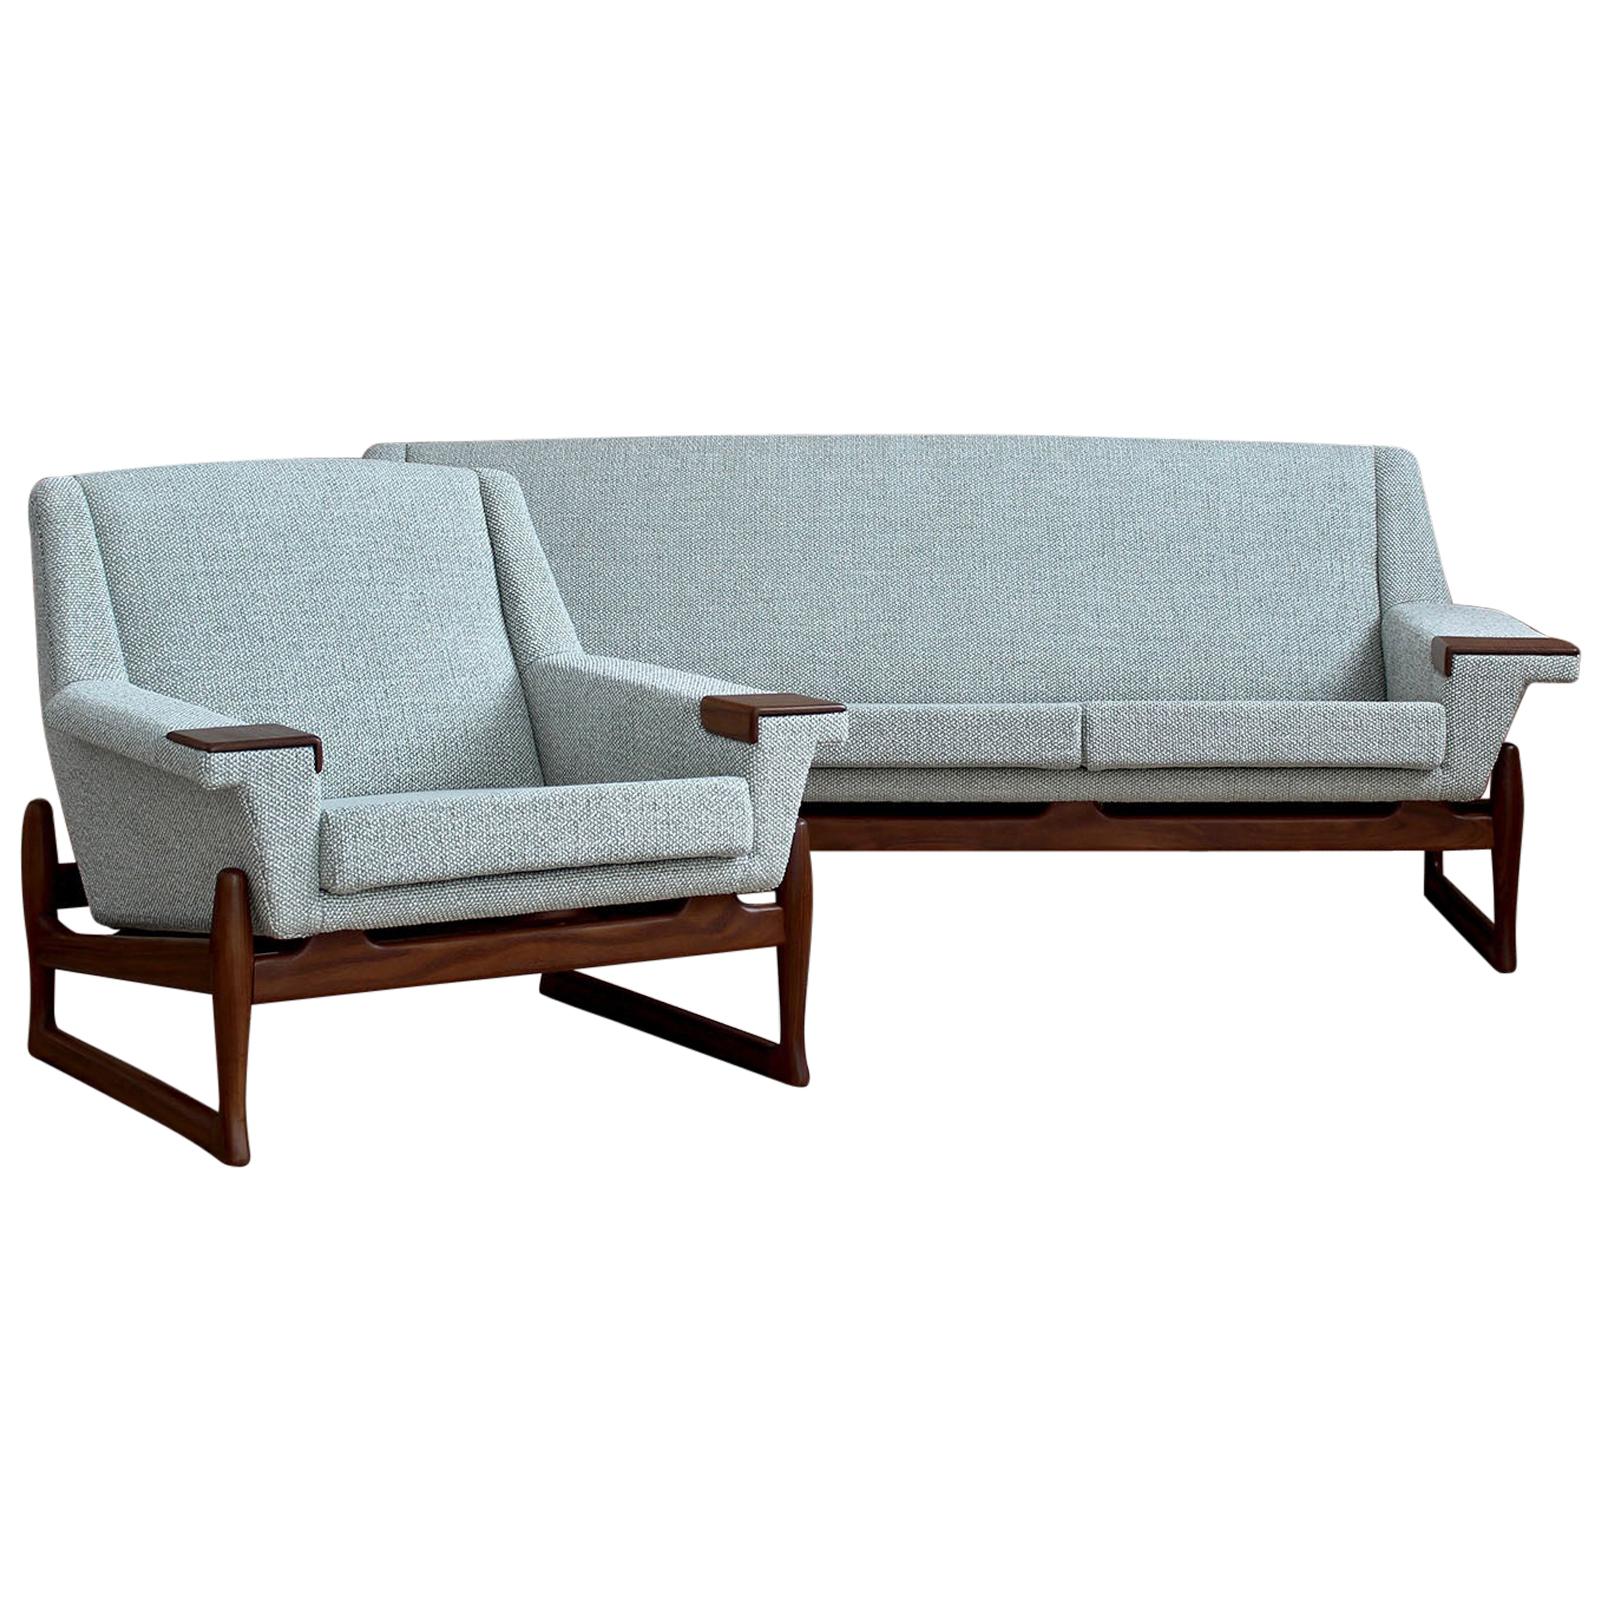 Johannes Andersen Sofa Set, AB Trensums, Mid-Century Modern, Scandinavian  Design